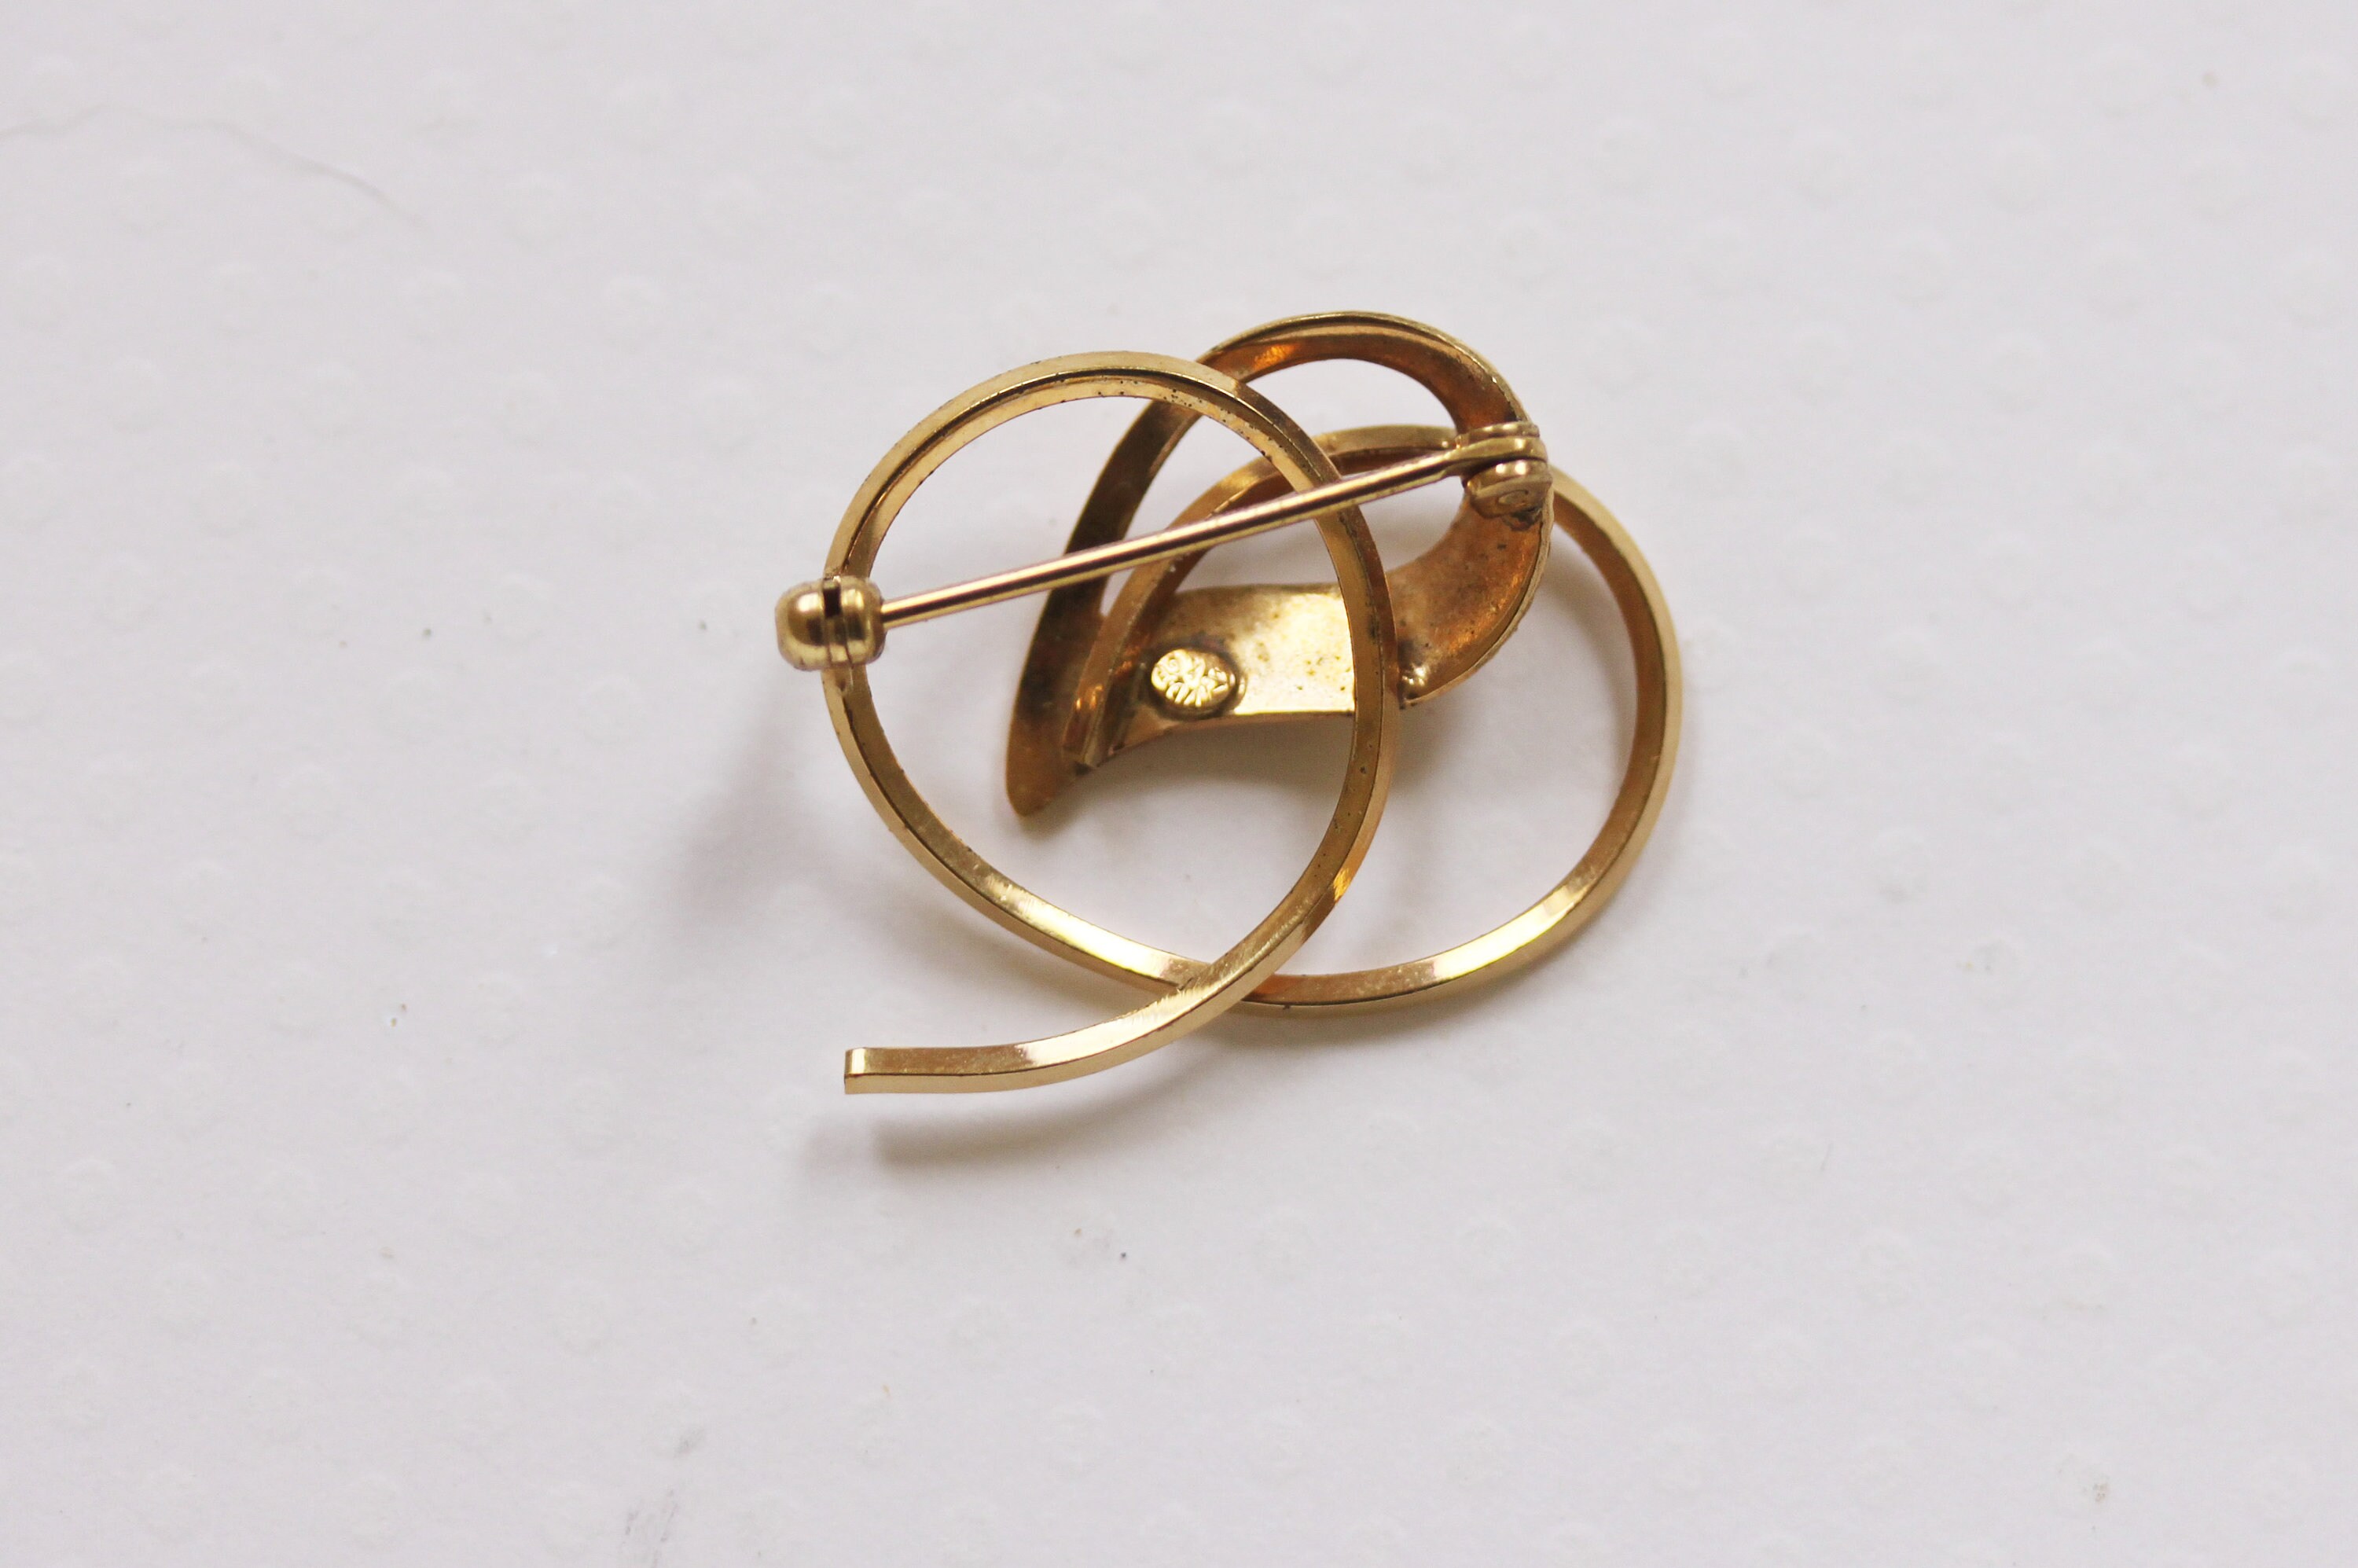 OLDMOE Vintage Gold Leaf Pin 14 Karat Gold Filled Leaf Brooch Madmen Jewelry Mid Century Pin